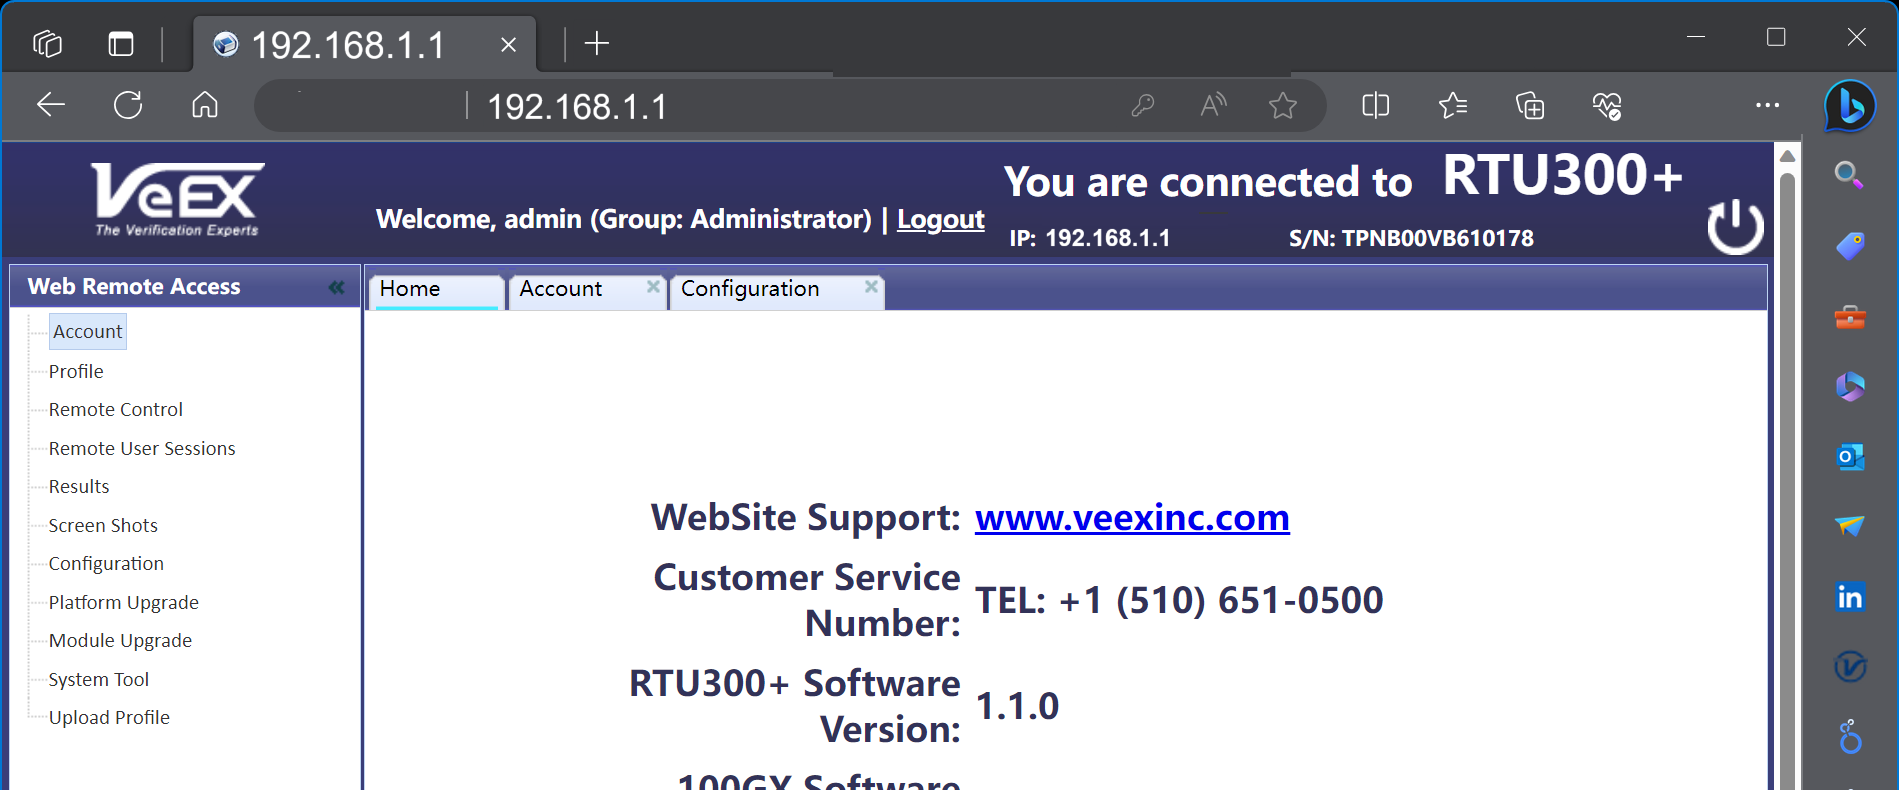 RTU-300+ Web Remote Access page